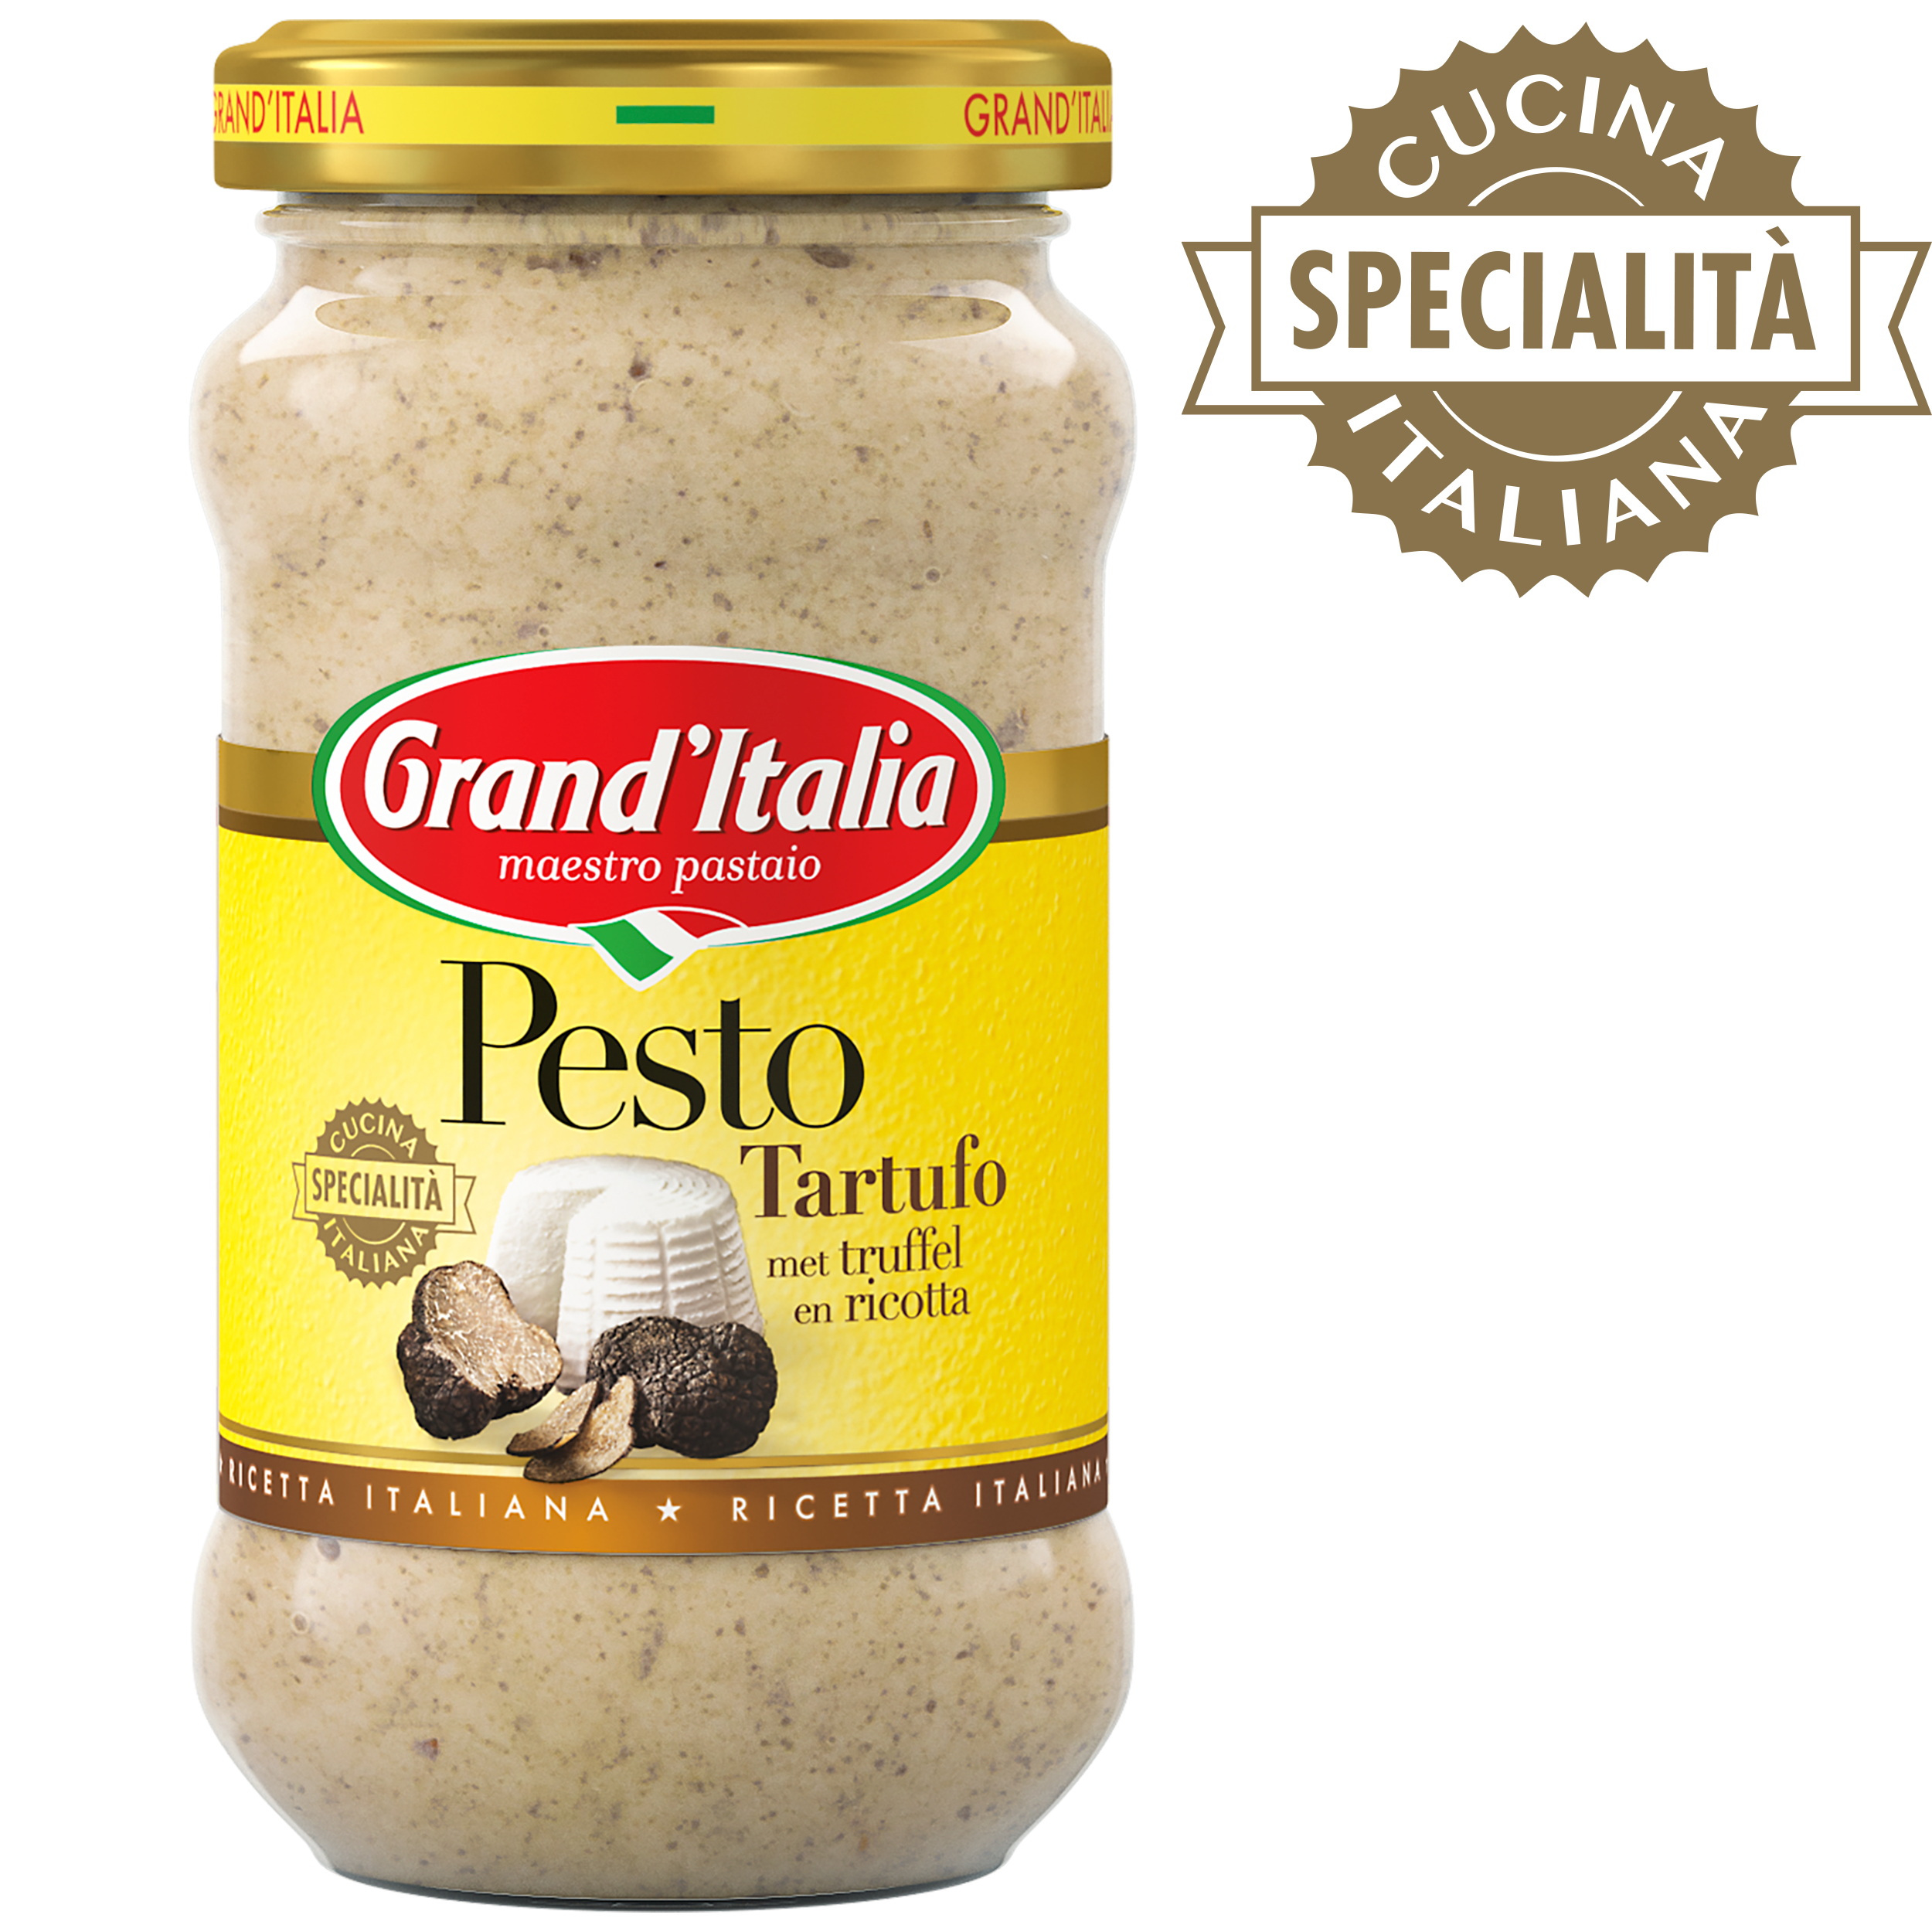 Pesto Tartufo 185g Grand'Italia - claim